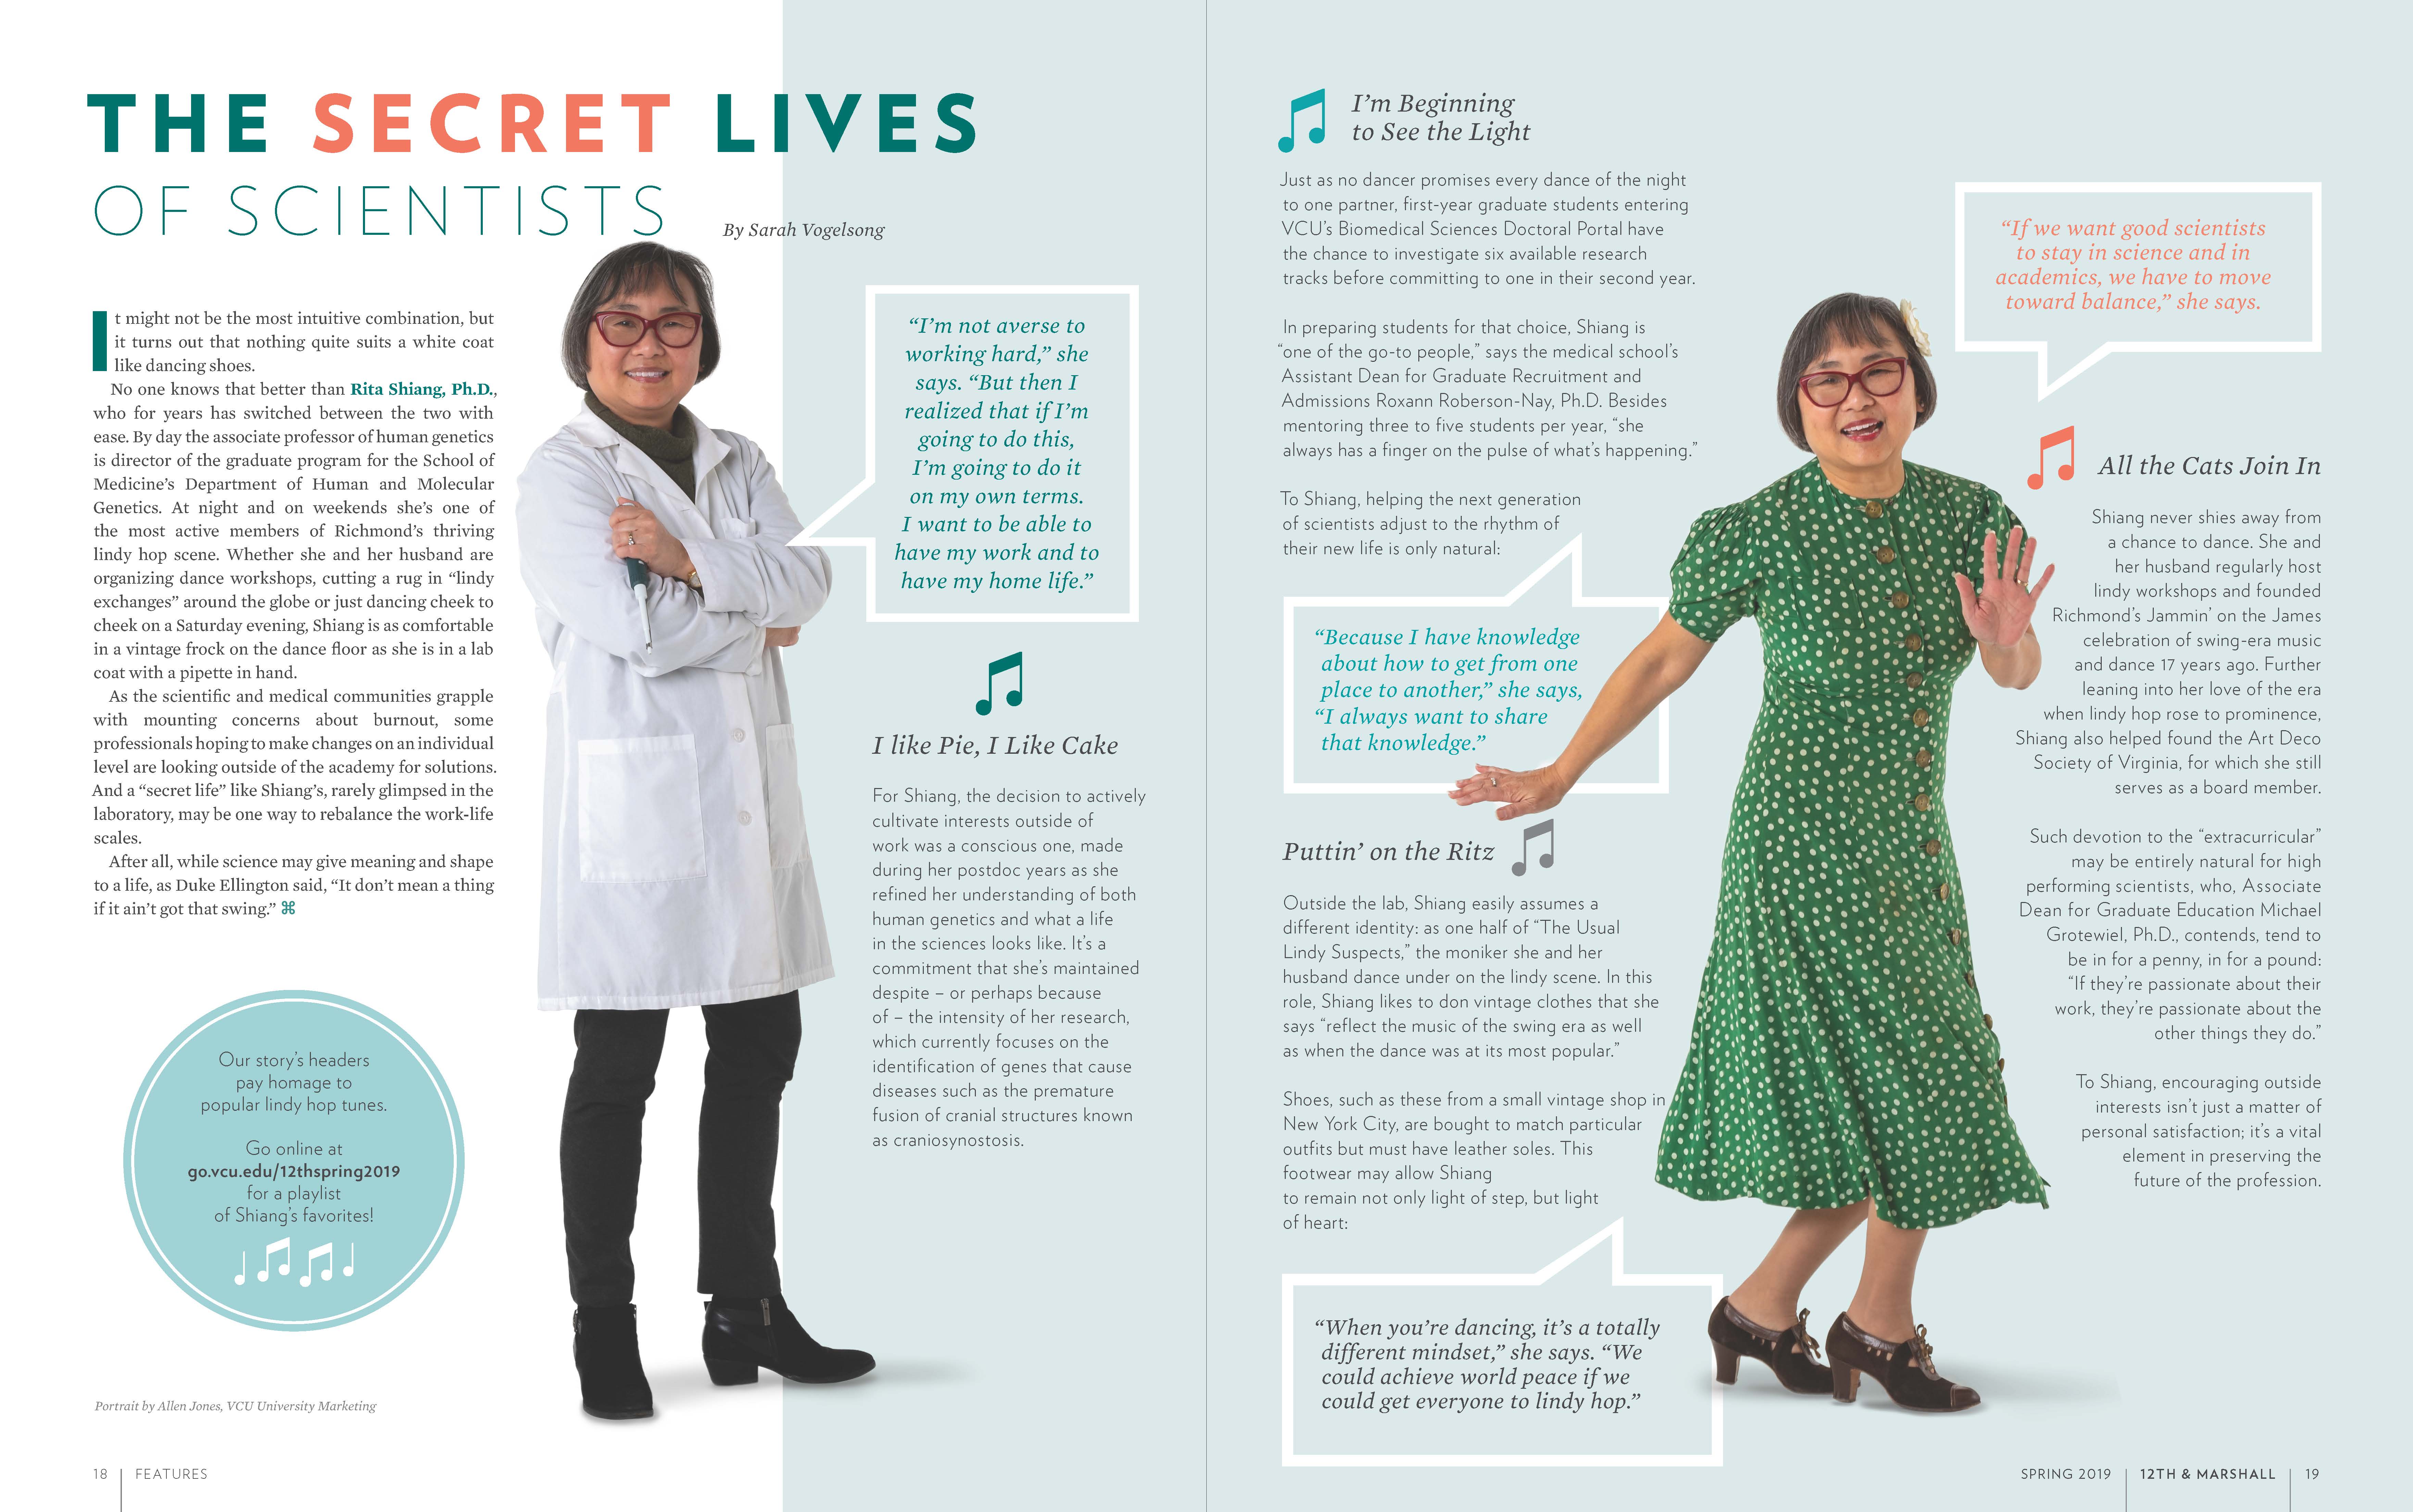 The secret lives of scientists